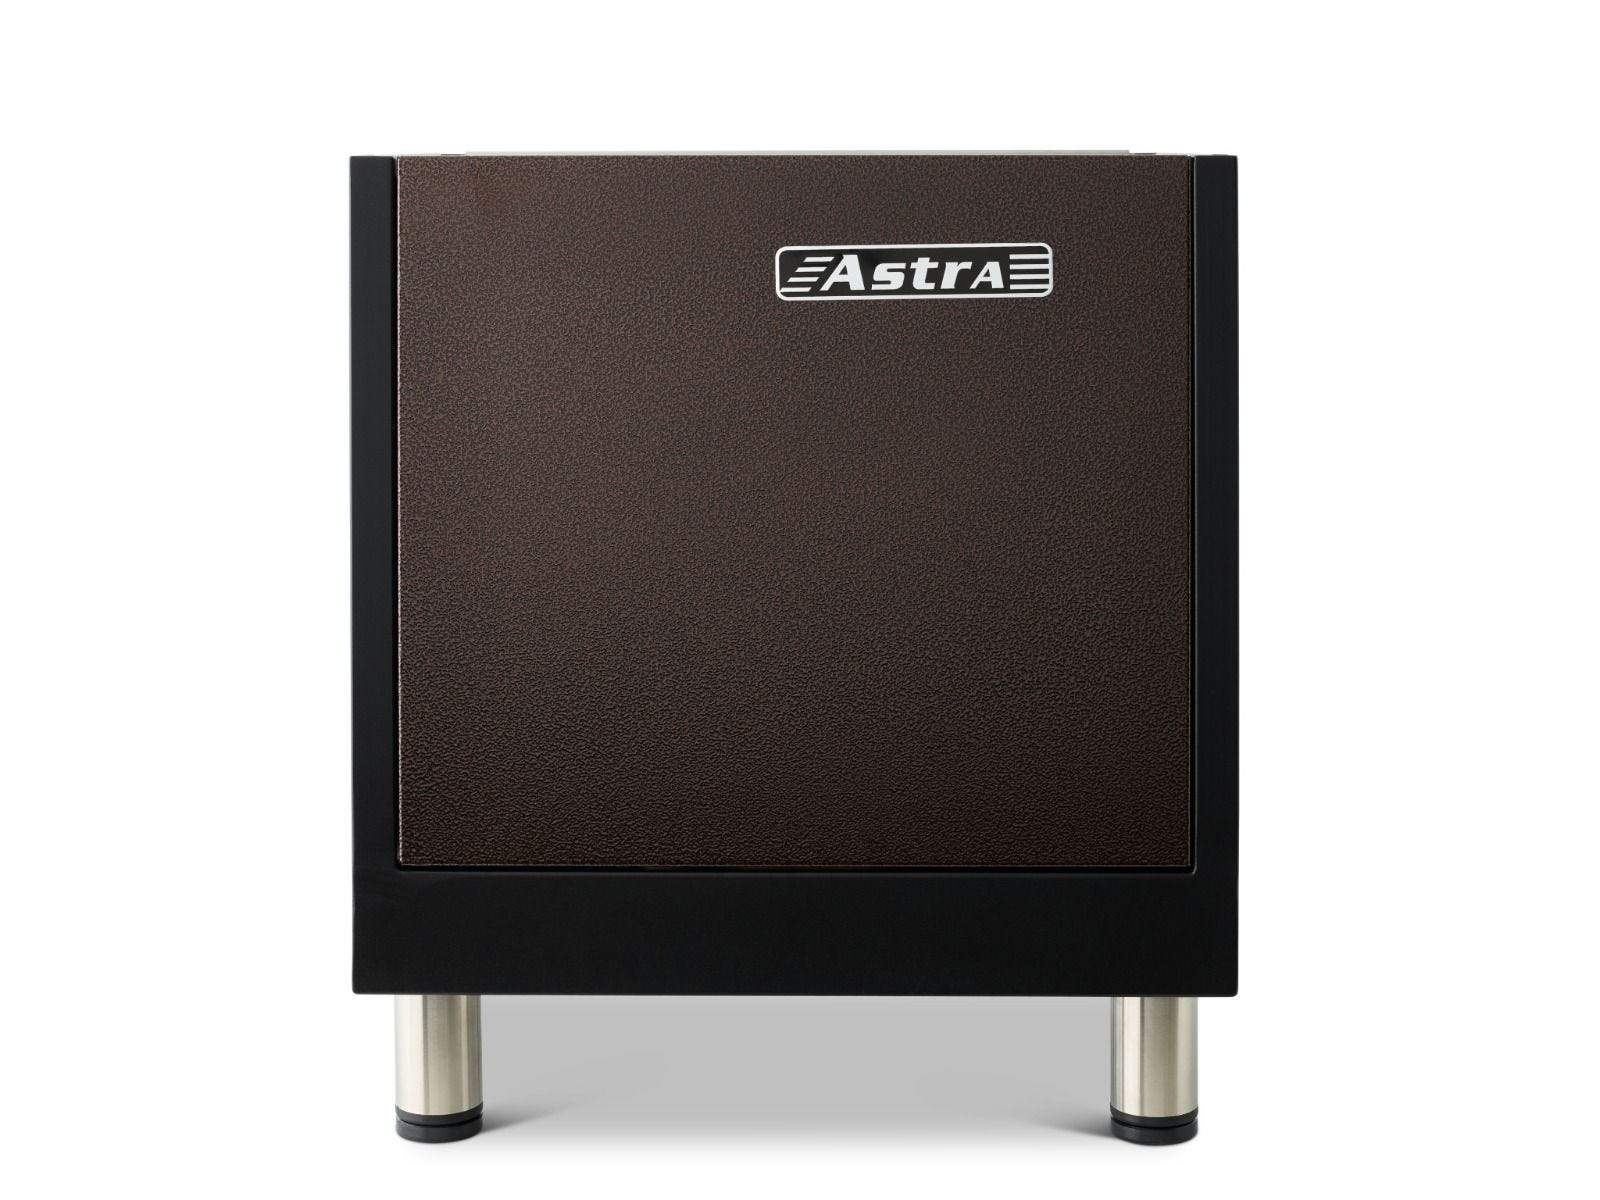 Astra Espresso Machines Astra MEGA I Semi-automatic Espresso Machine, 220V M1S-016